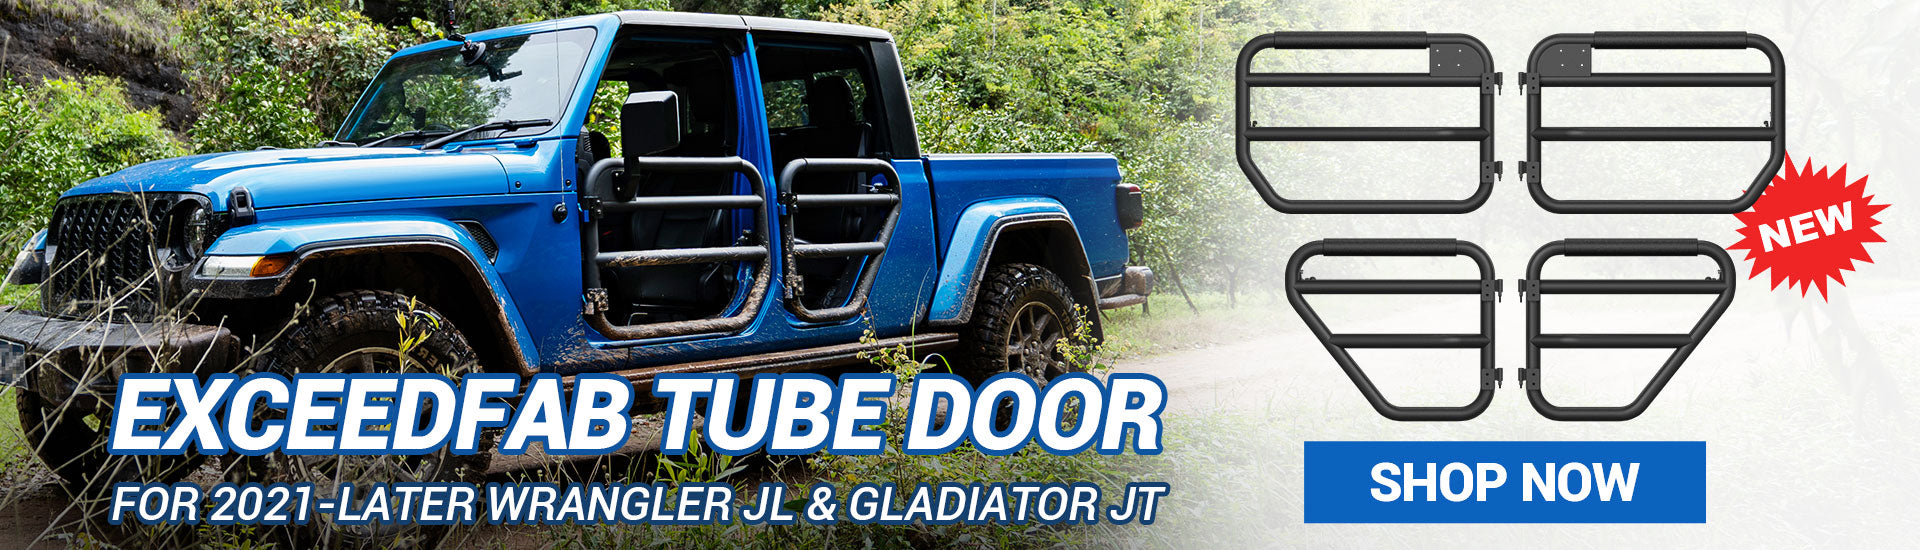 exceedfab Jeep Wrangler tube doors